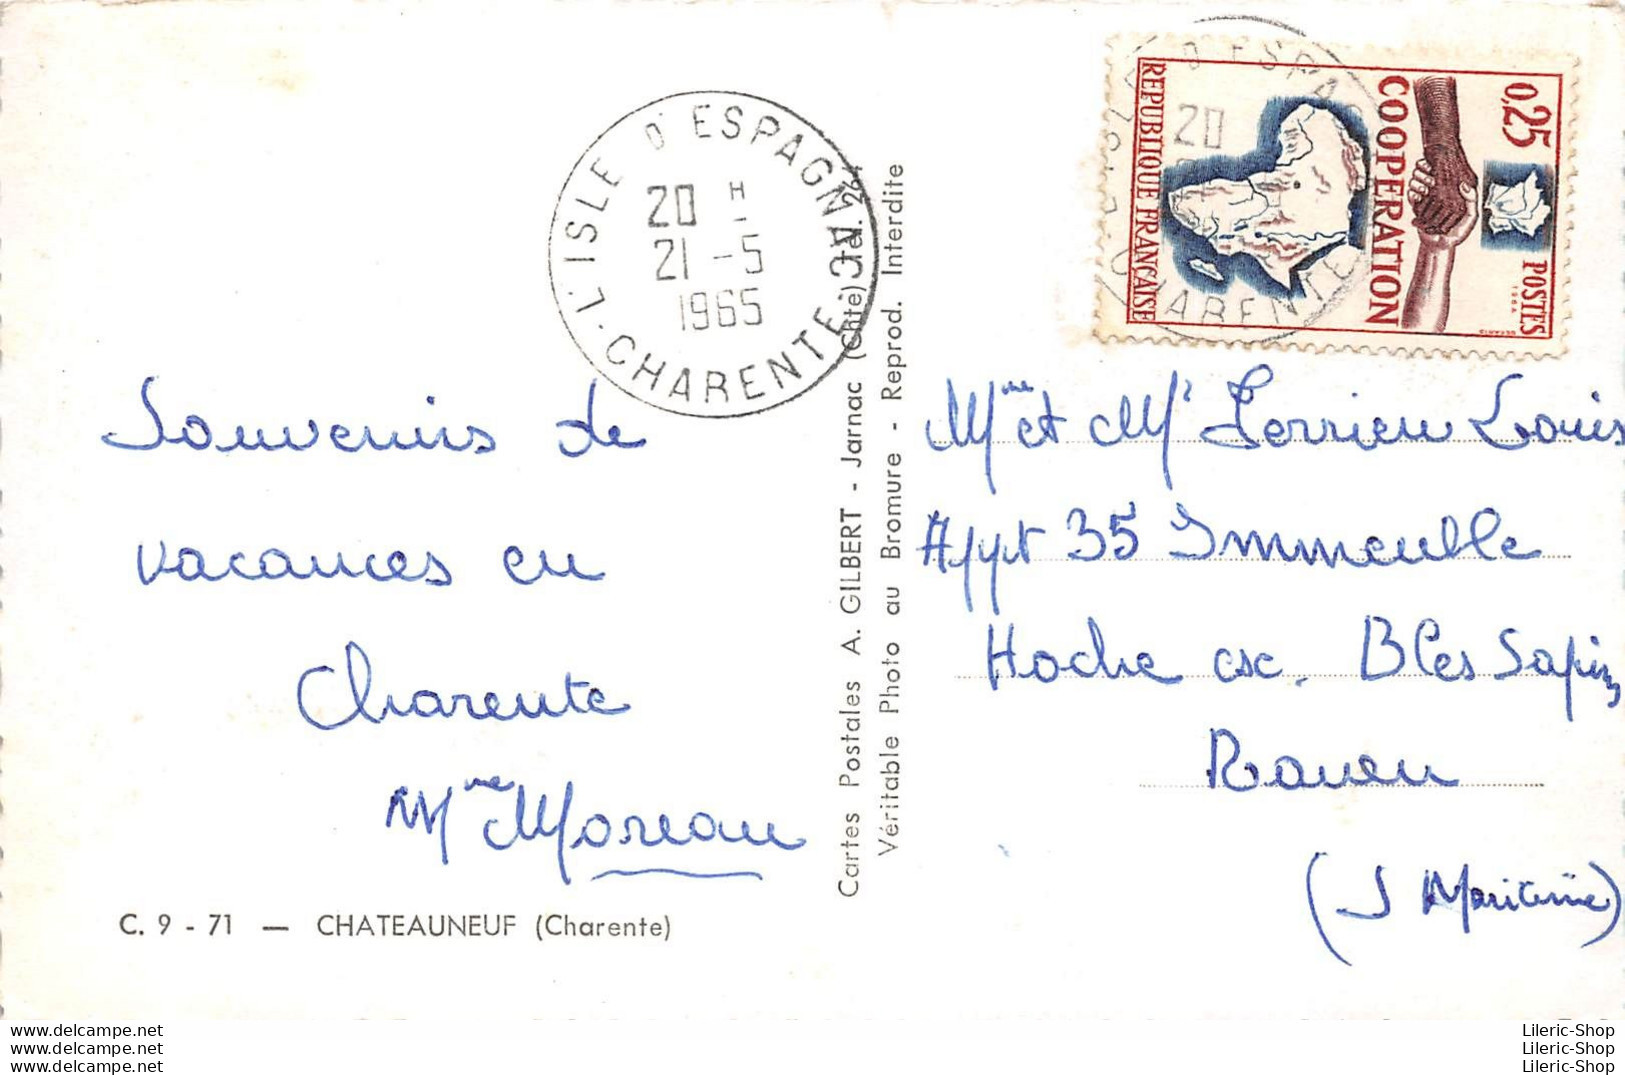 C. 9 - 71 - CHATEAUNEUF En 1965 (Charente)  A. GILBERT - Jarnac - Chateauneuf Sur Charente